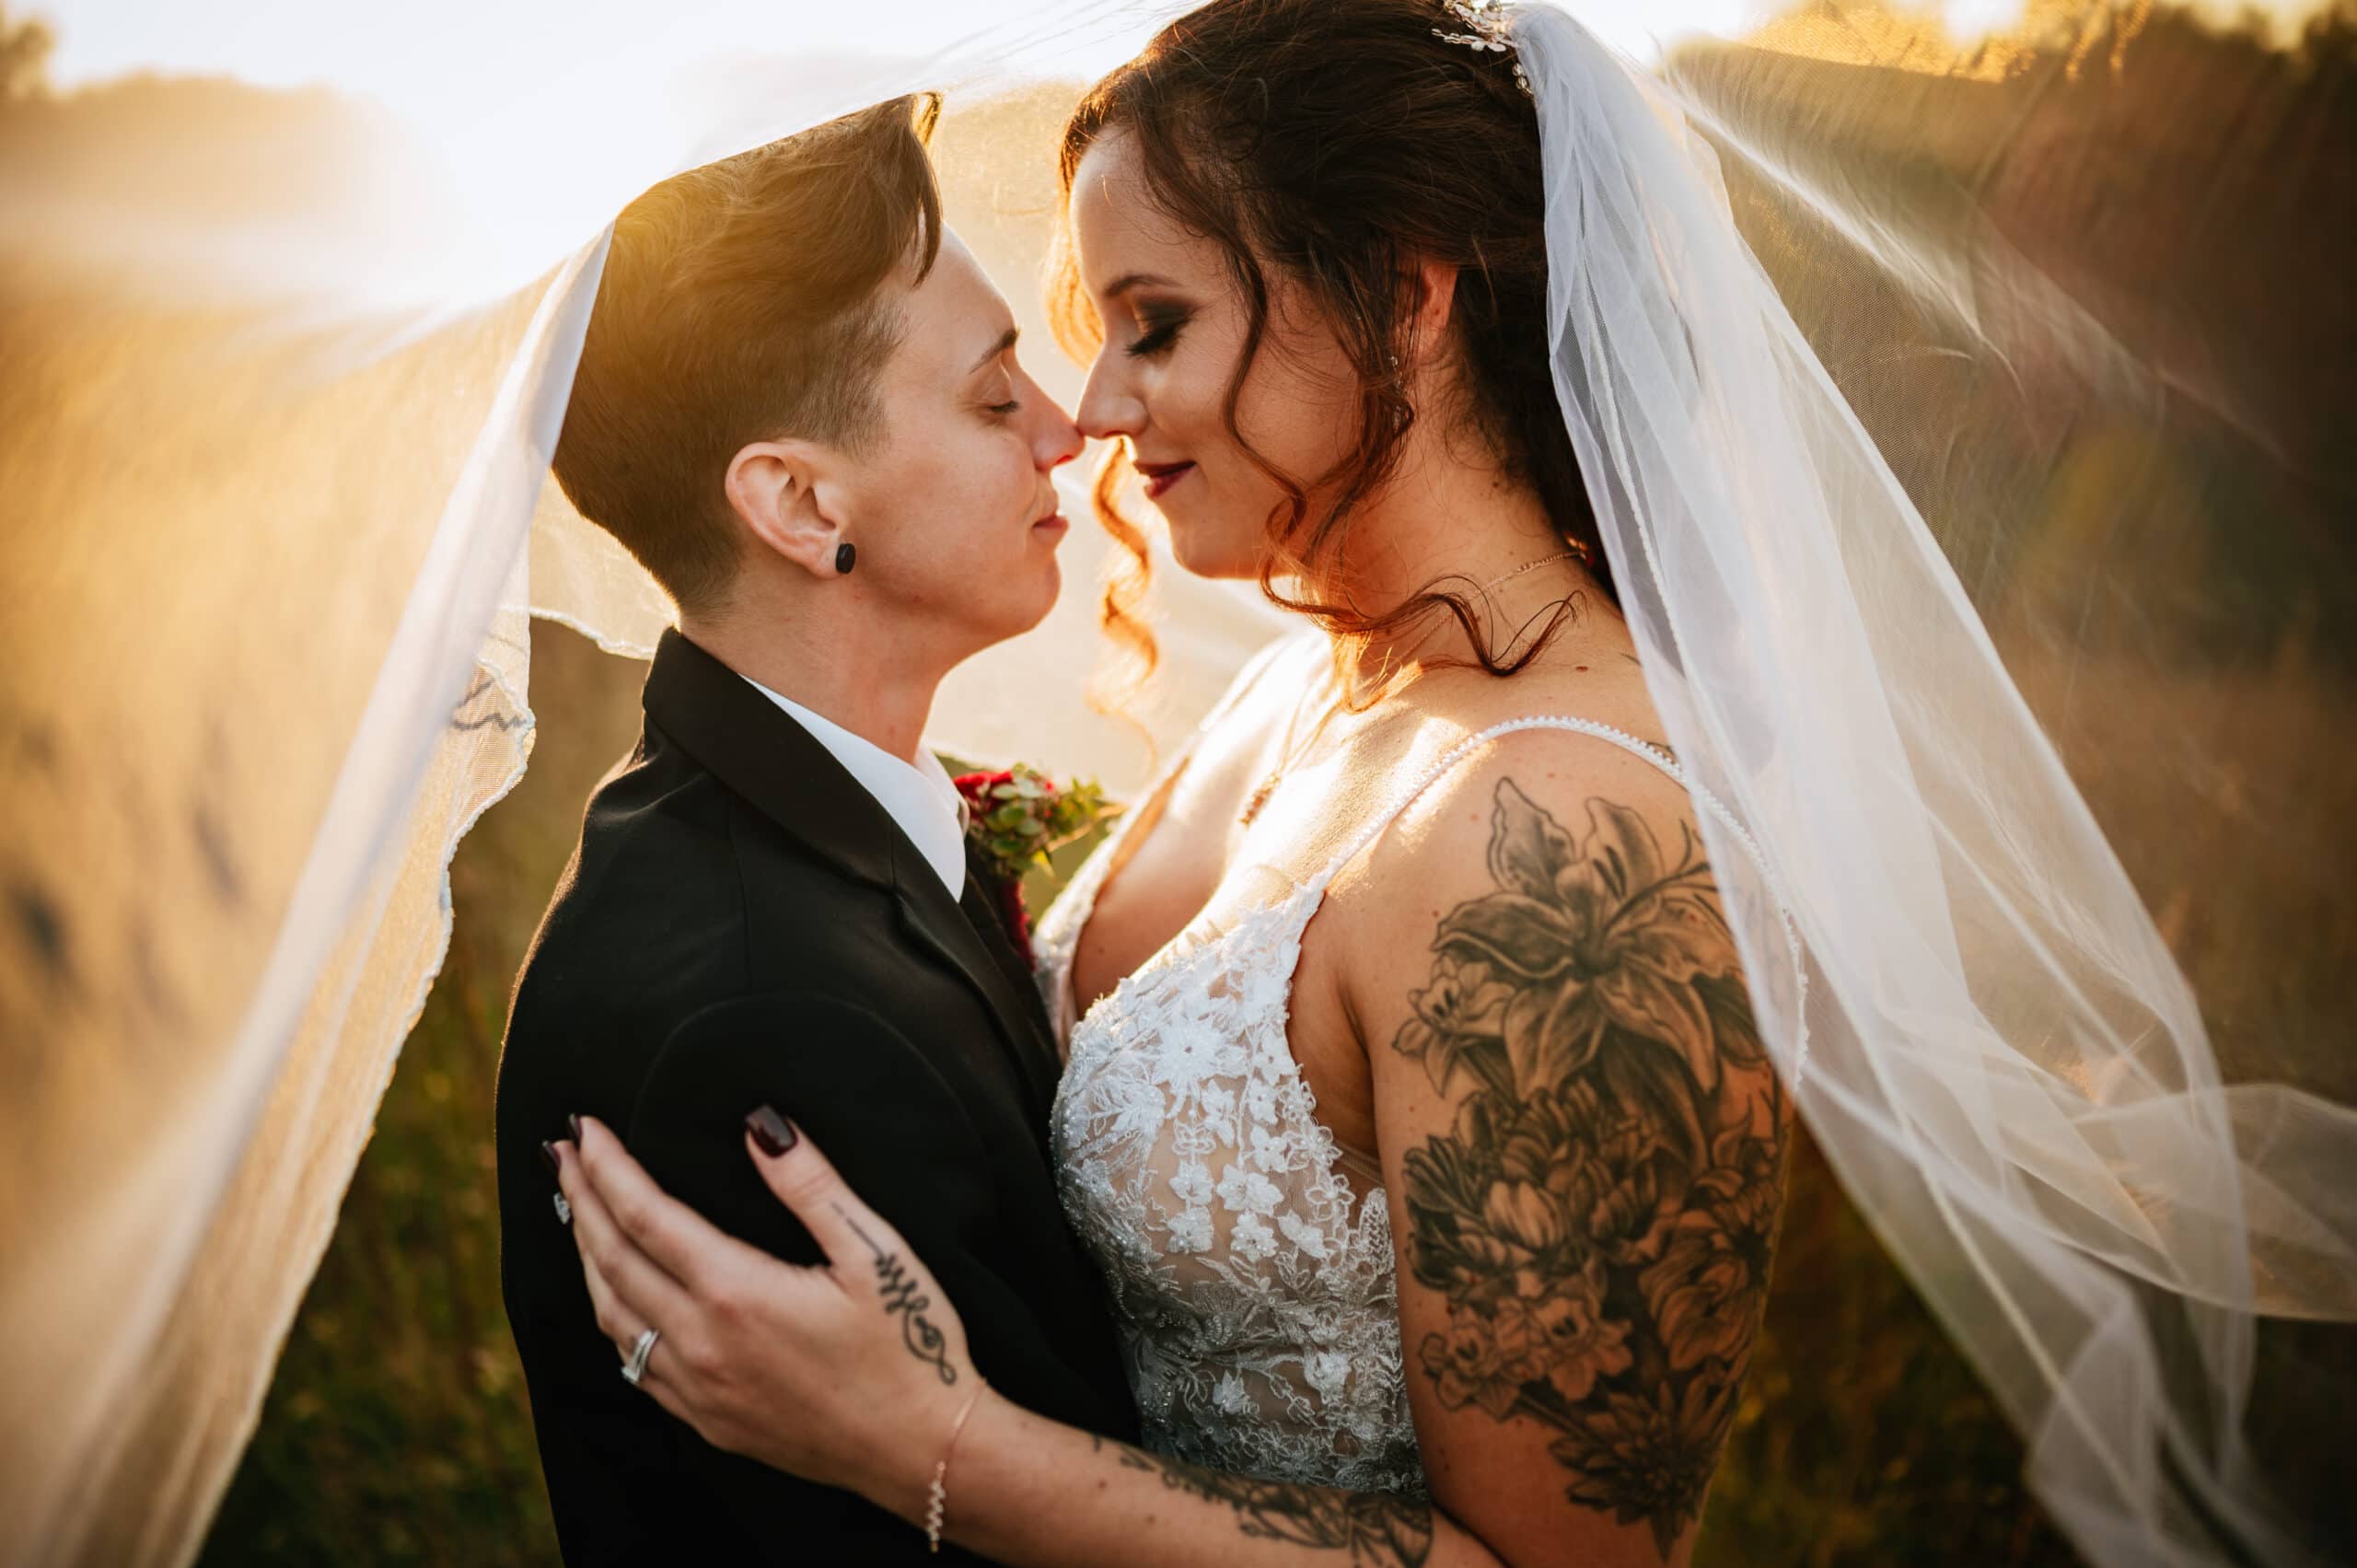 lgbtq gay west virginia brides embrace under veil 